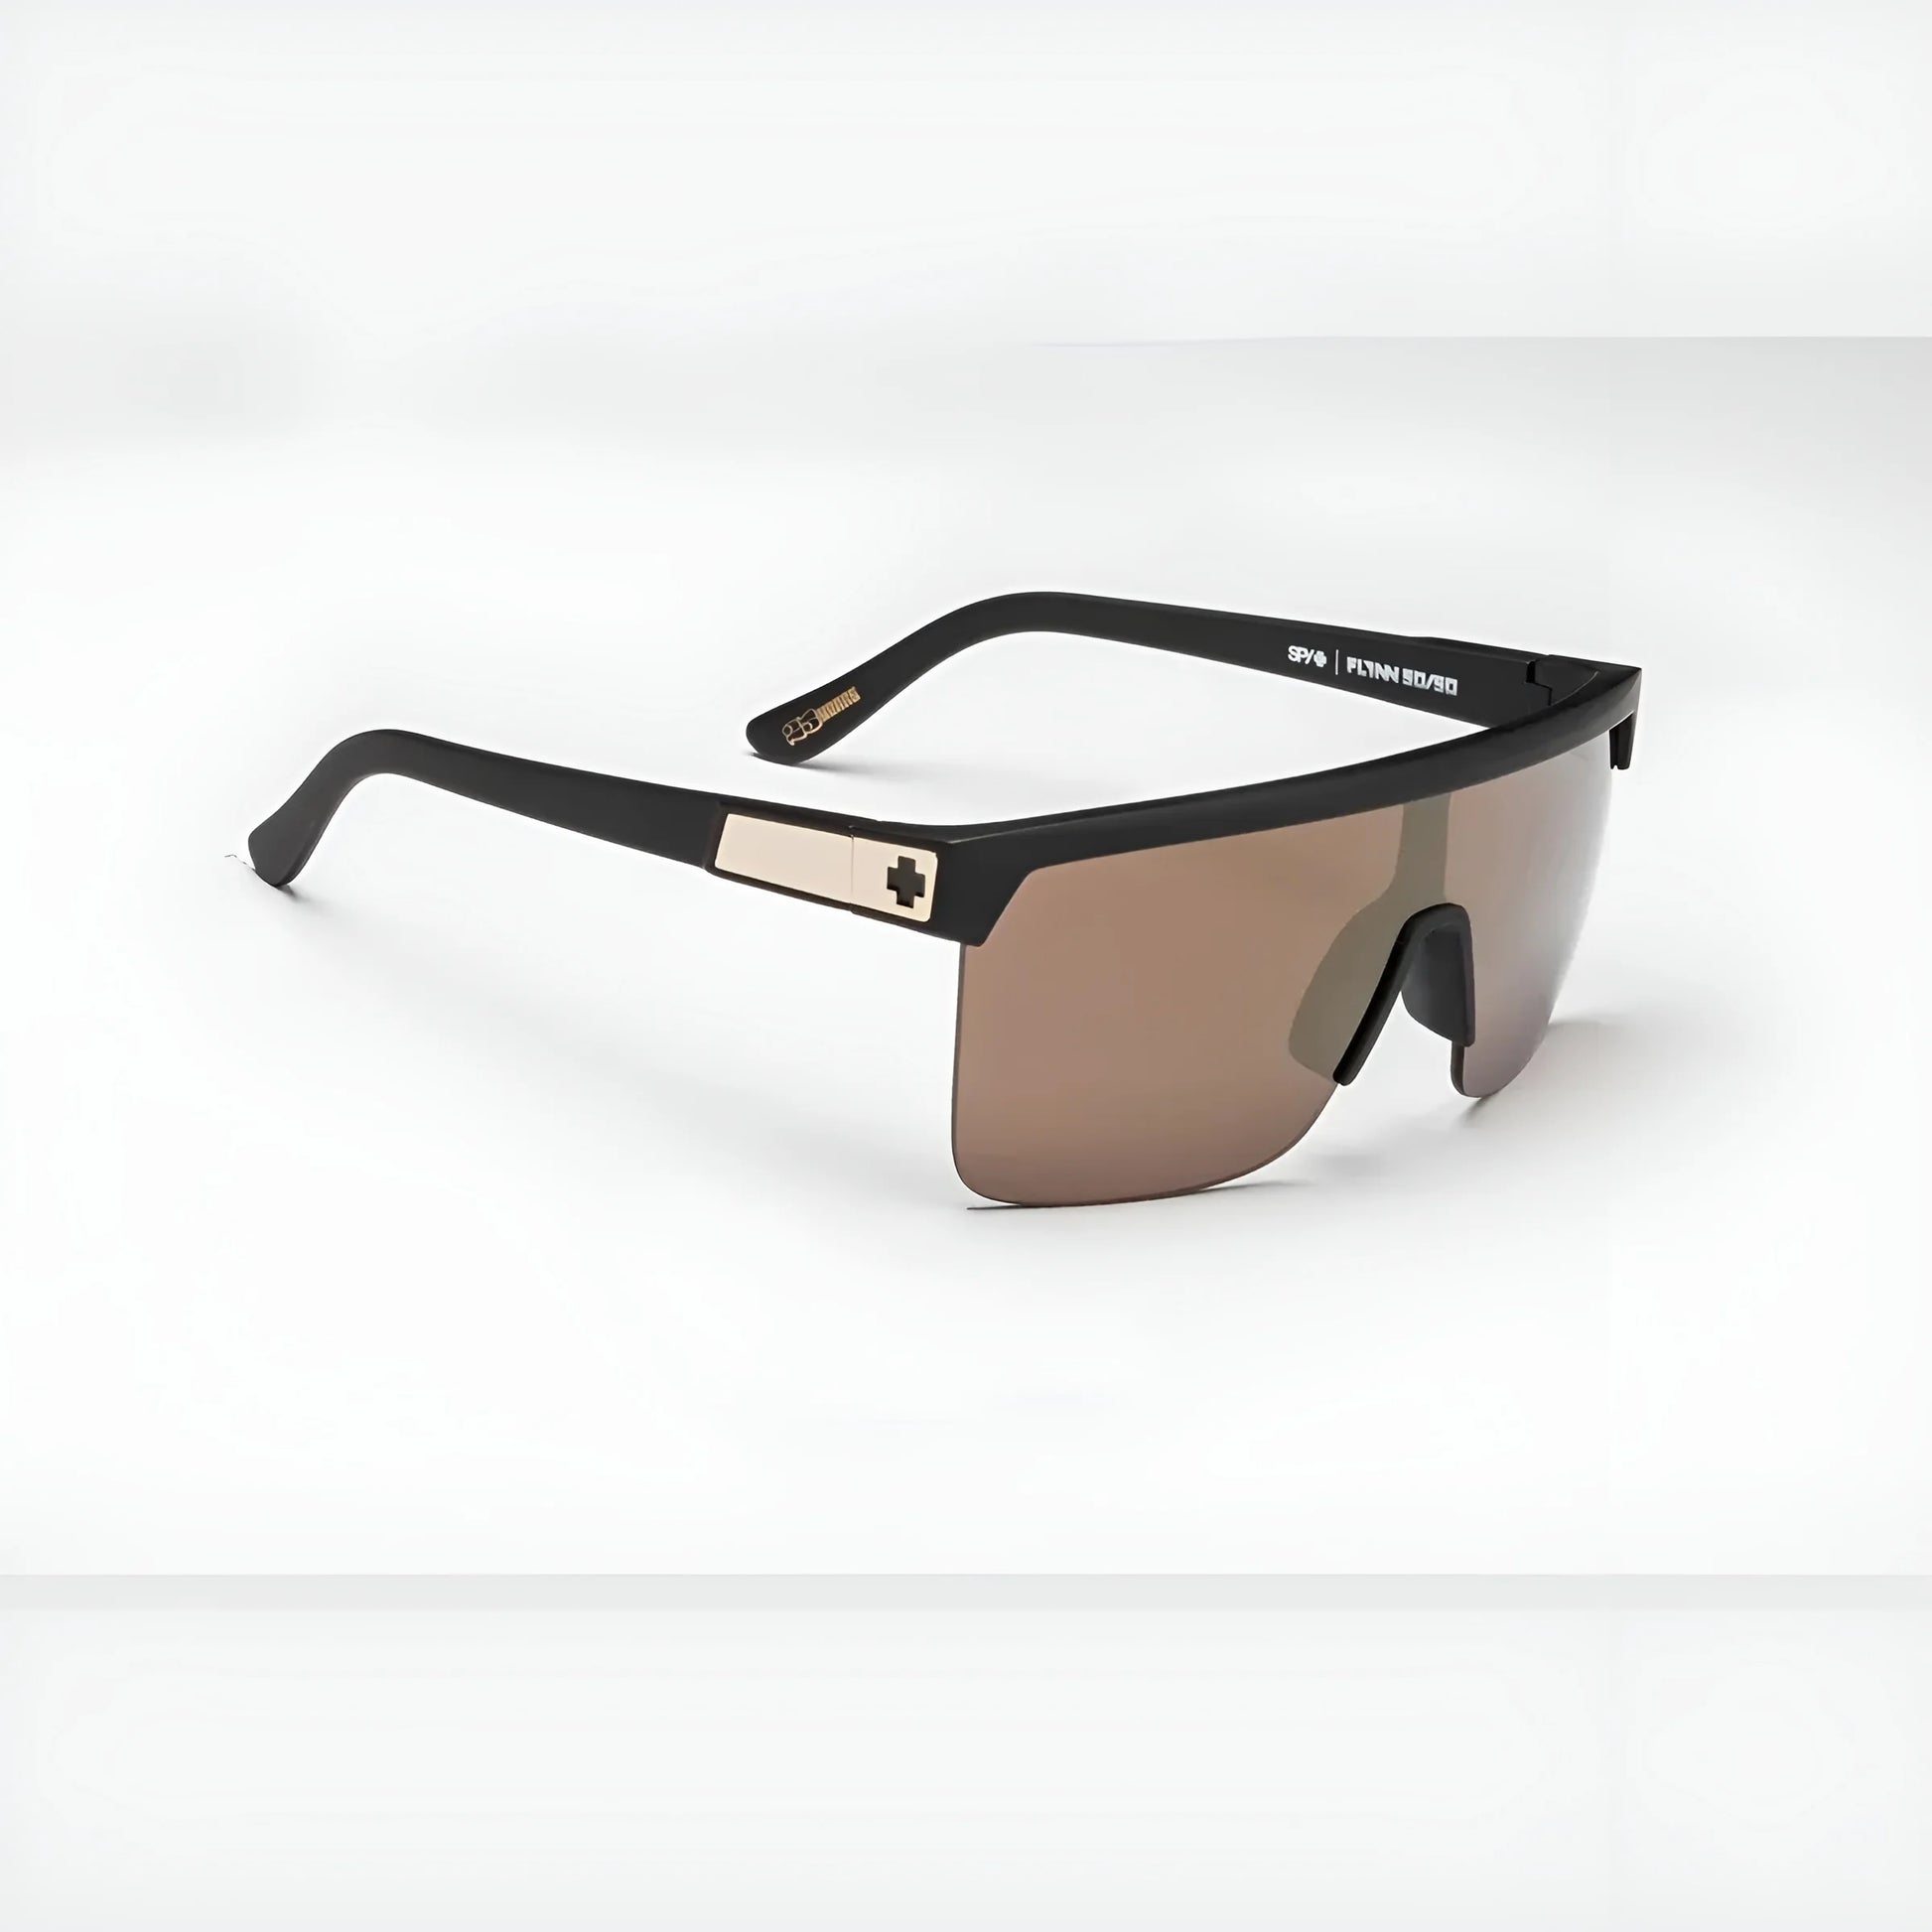 SPY FLYNN 50/50 Sunglasses 25th Anniv Black Gold Matte / HD Plus Bronze with Gold Spectra Mirror